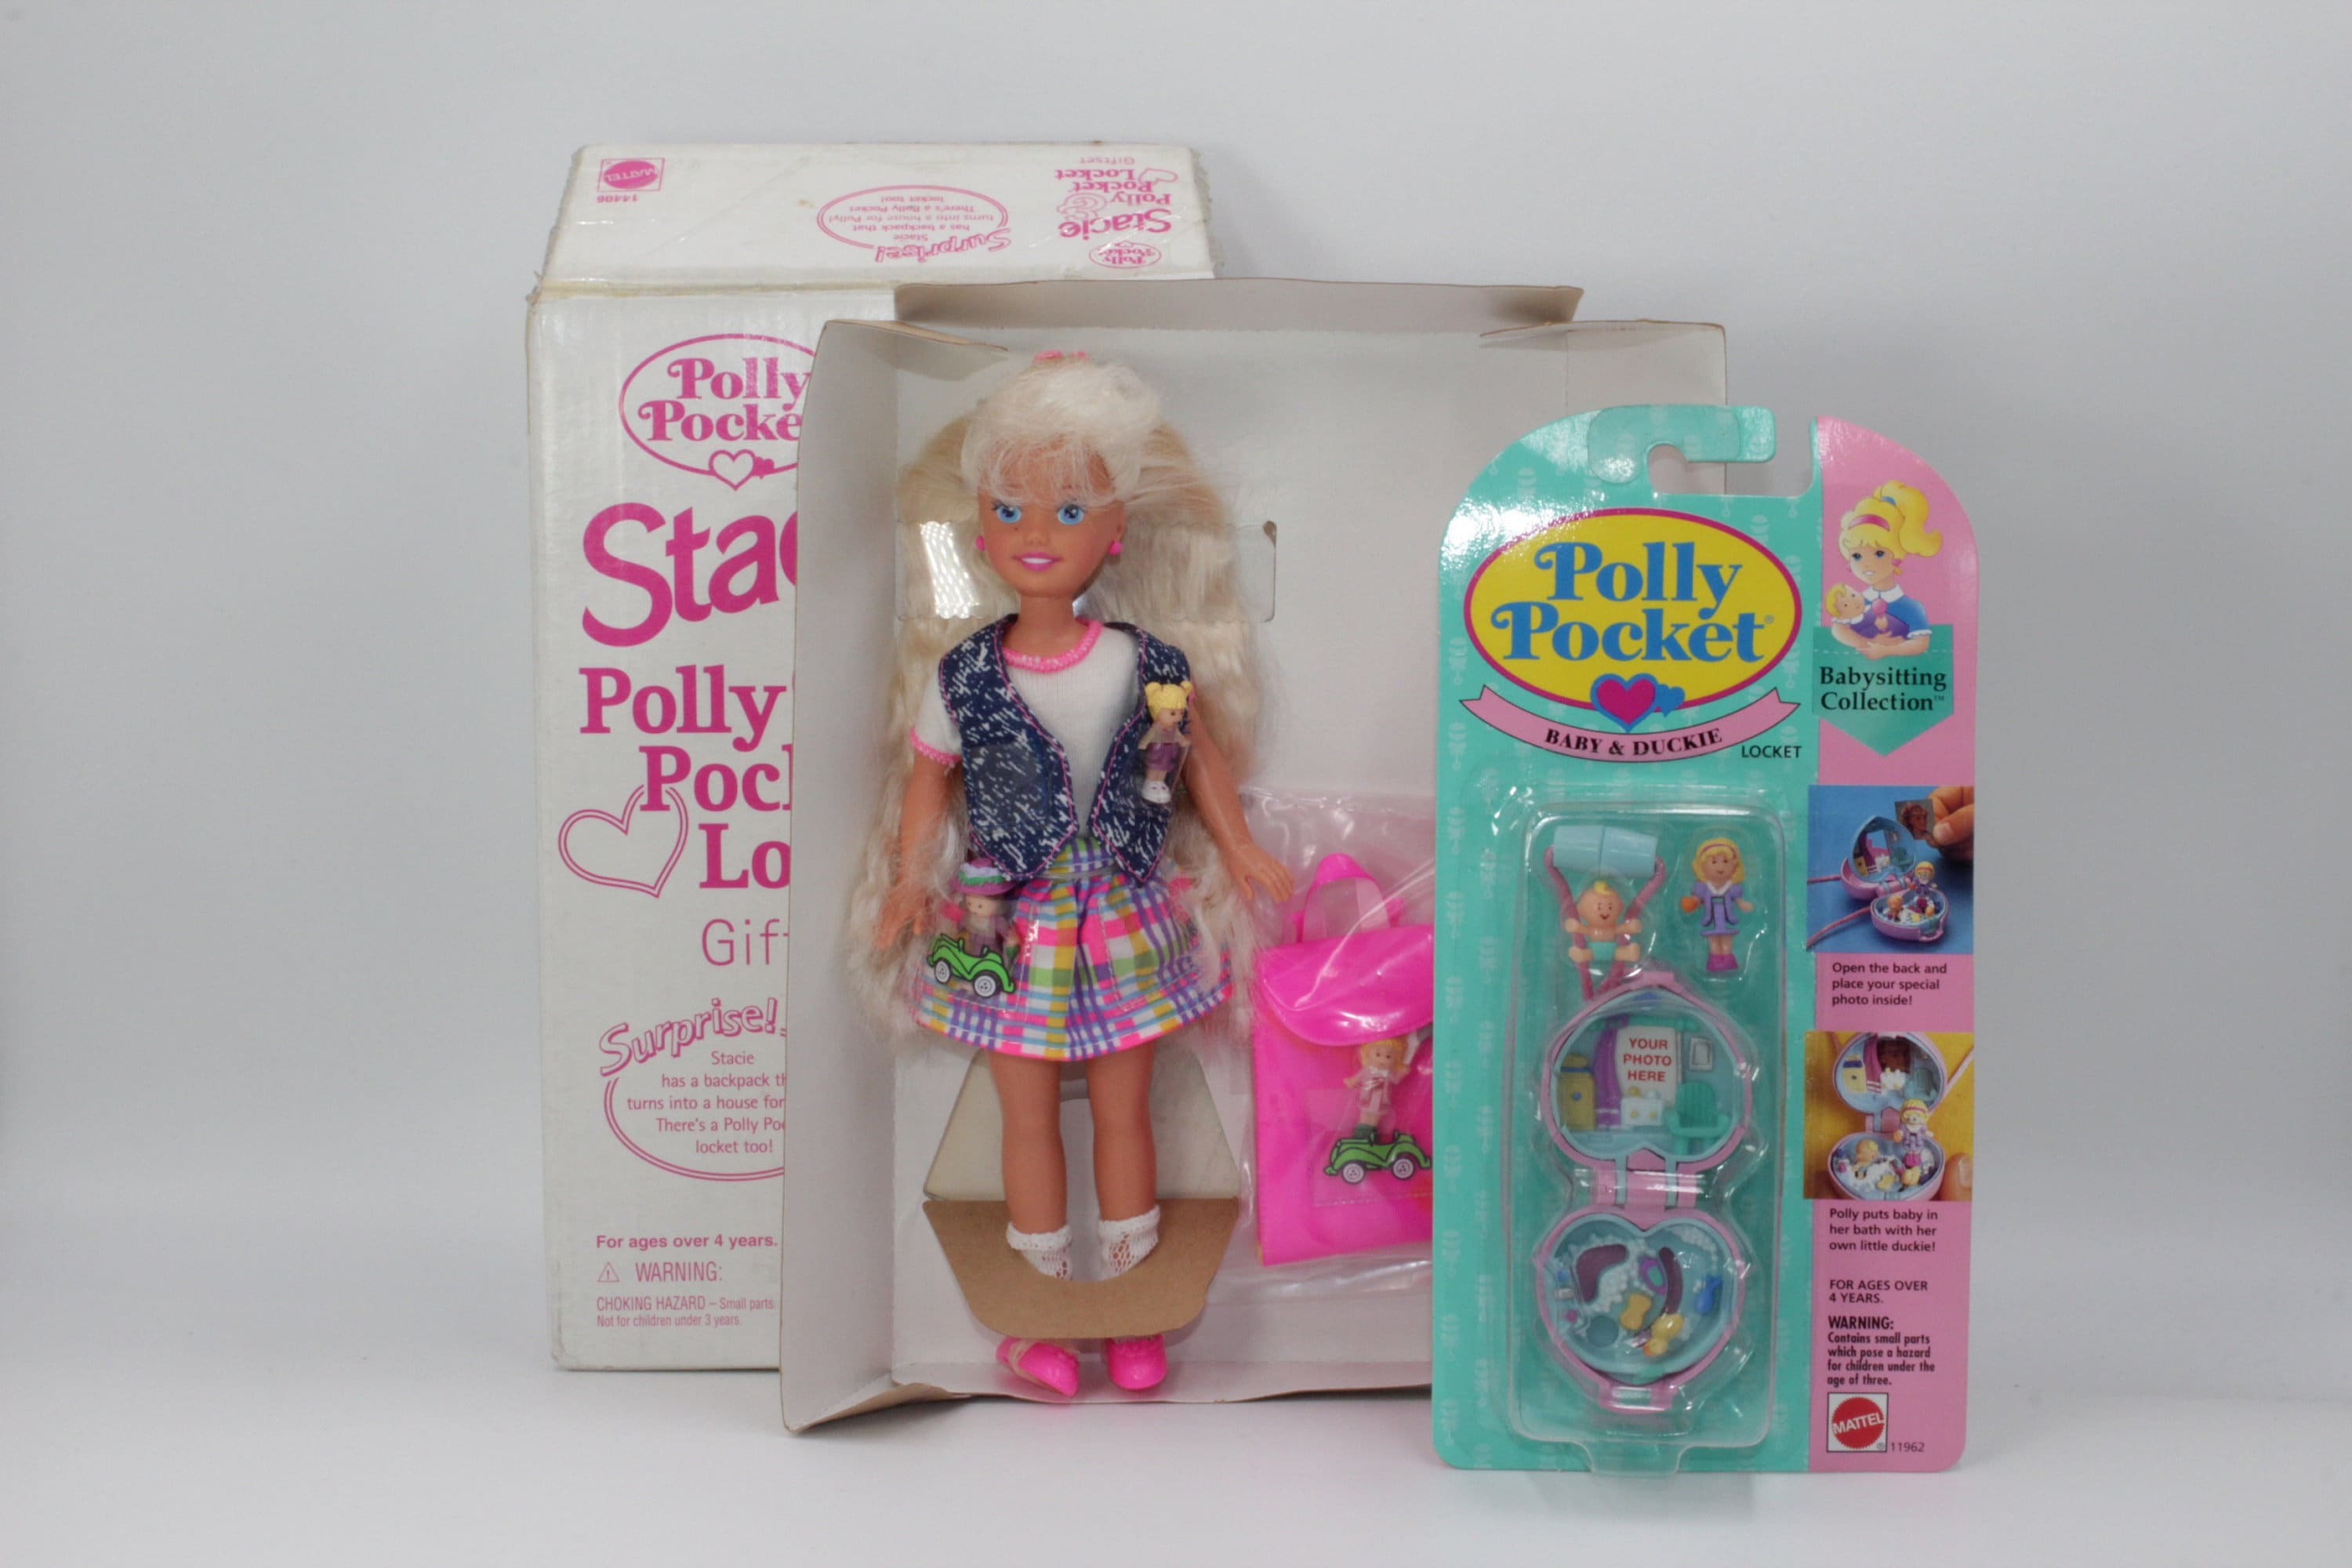 Vintage 1990's Barbie STACIE 3 in 1 Bunk Bed Retired Mattel Blue & Pink  Bed, Desk, and Closet 